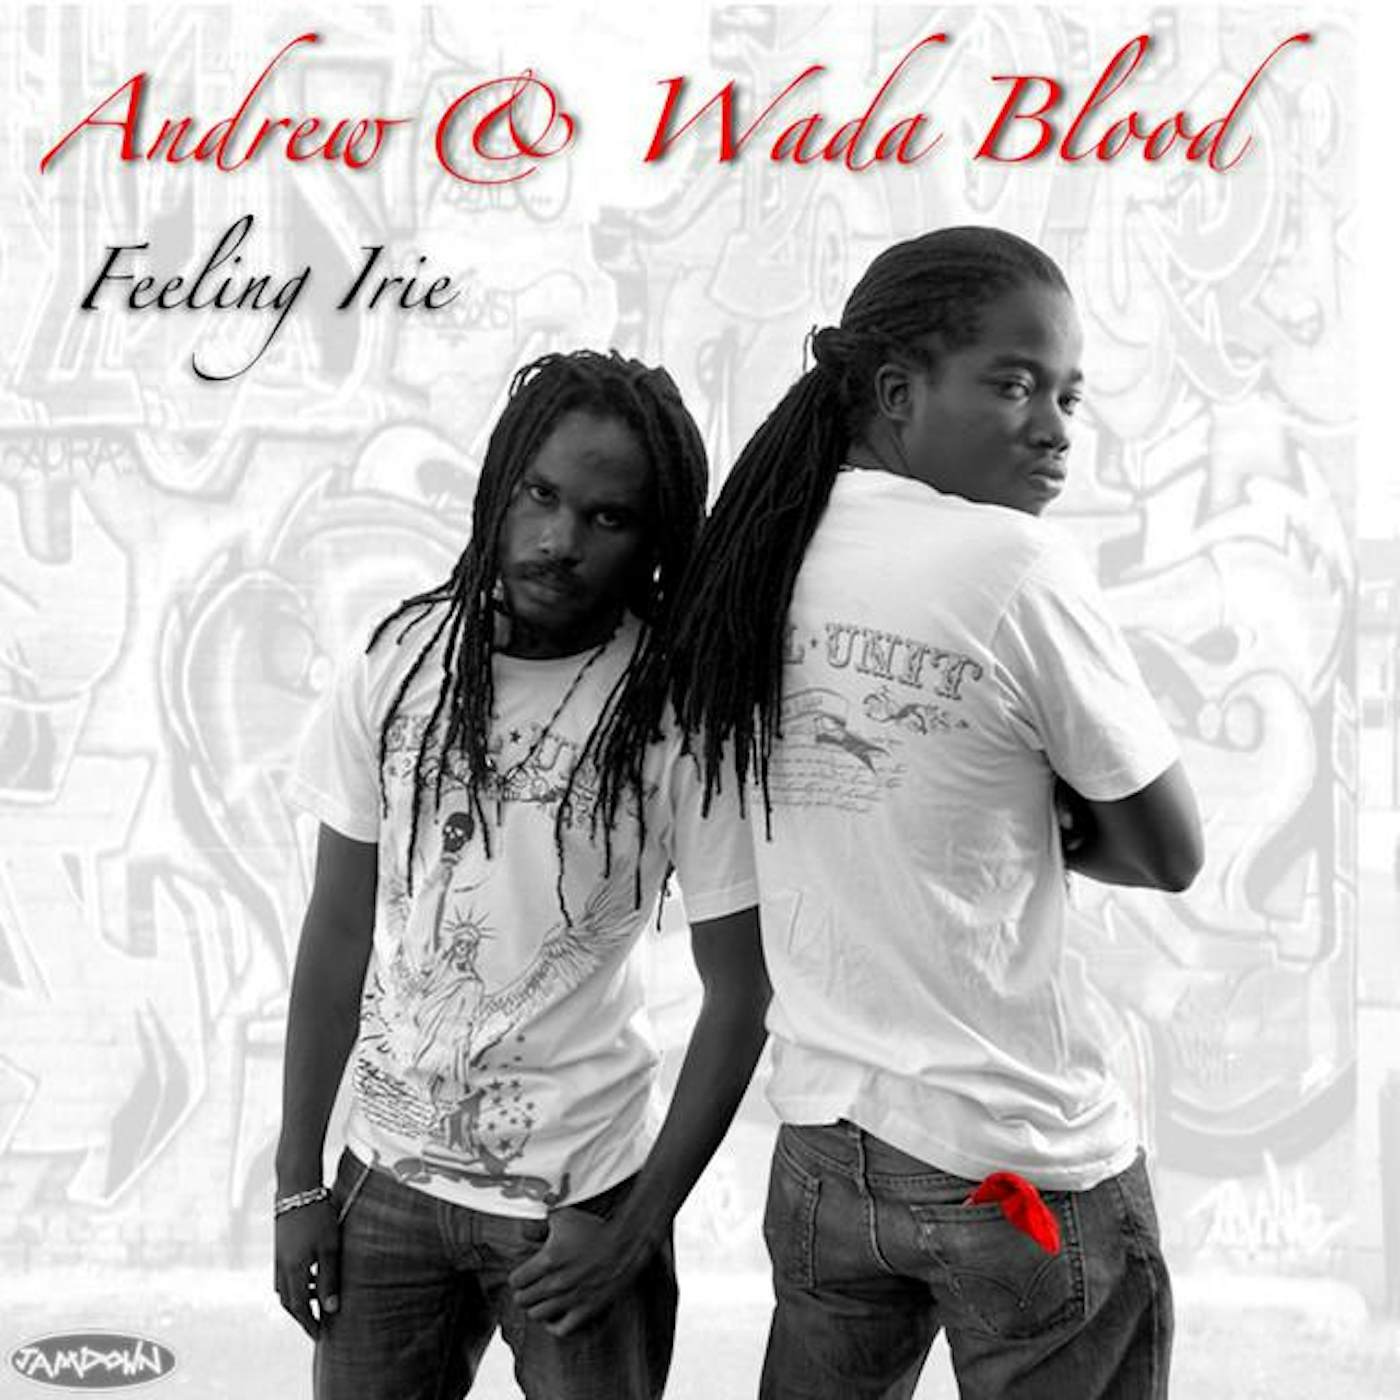 Andrew & Wada Blood